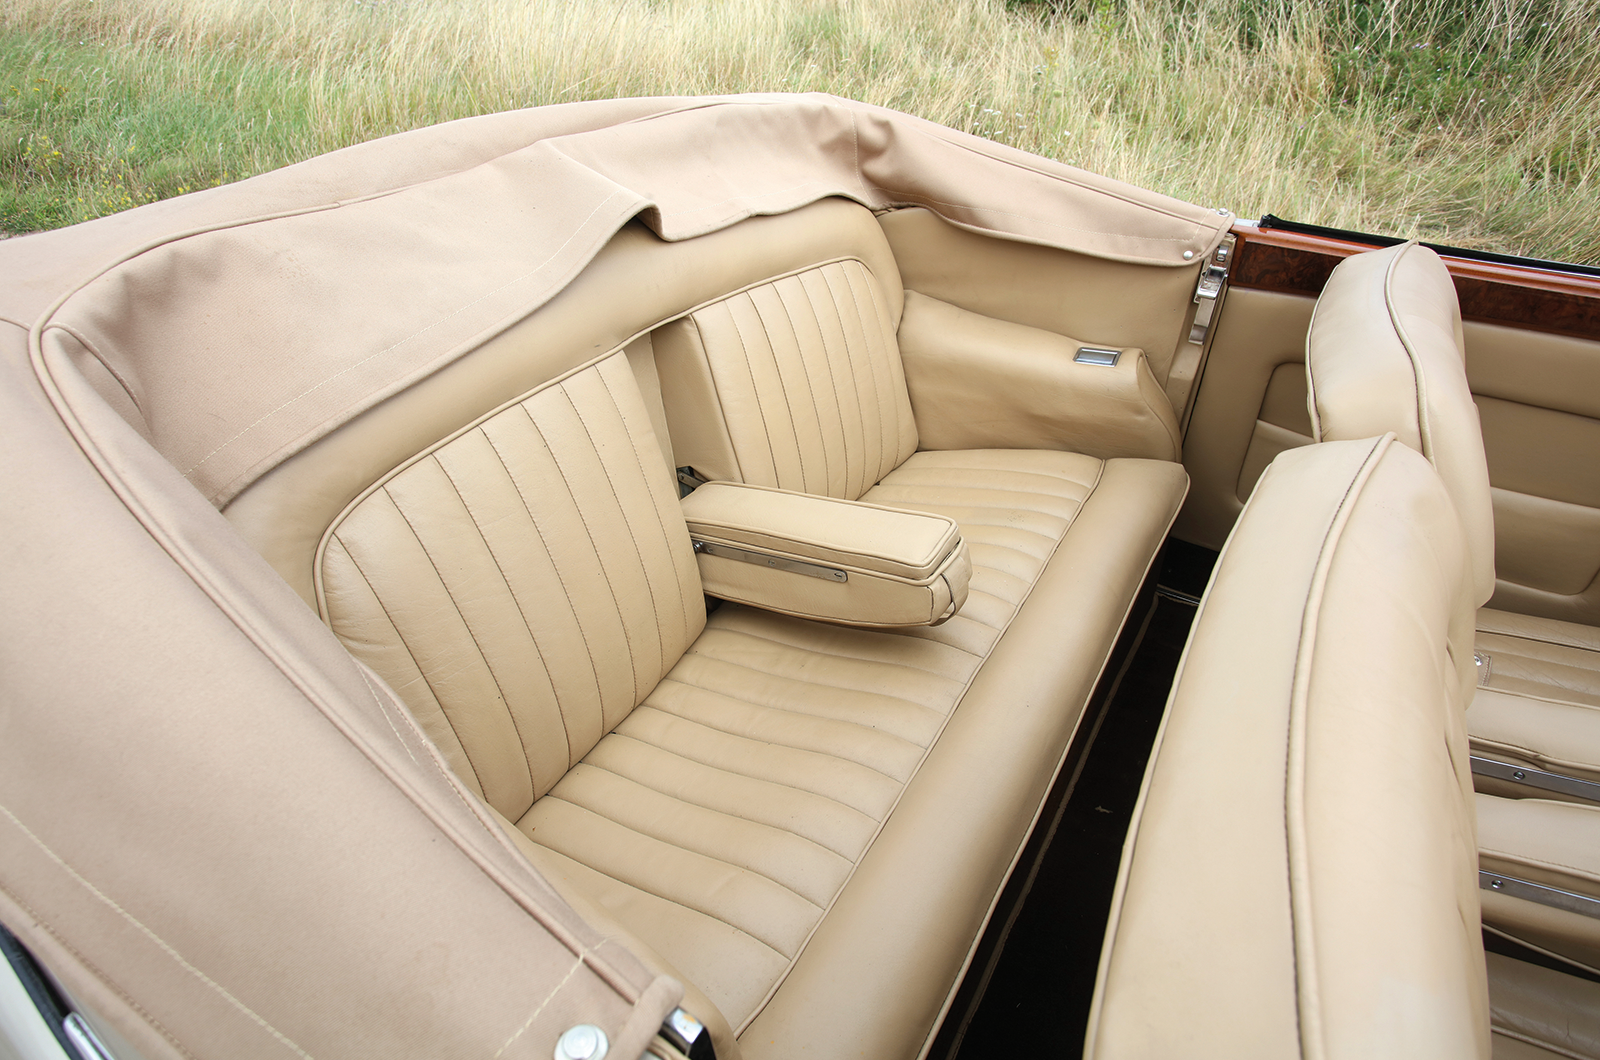 Classic & Sports Car – From the past with presence: Bristol 405 vs Lagonda 3 Litre